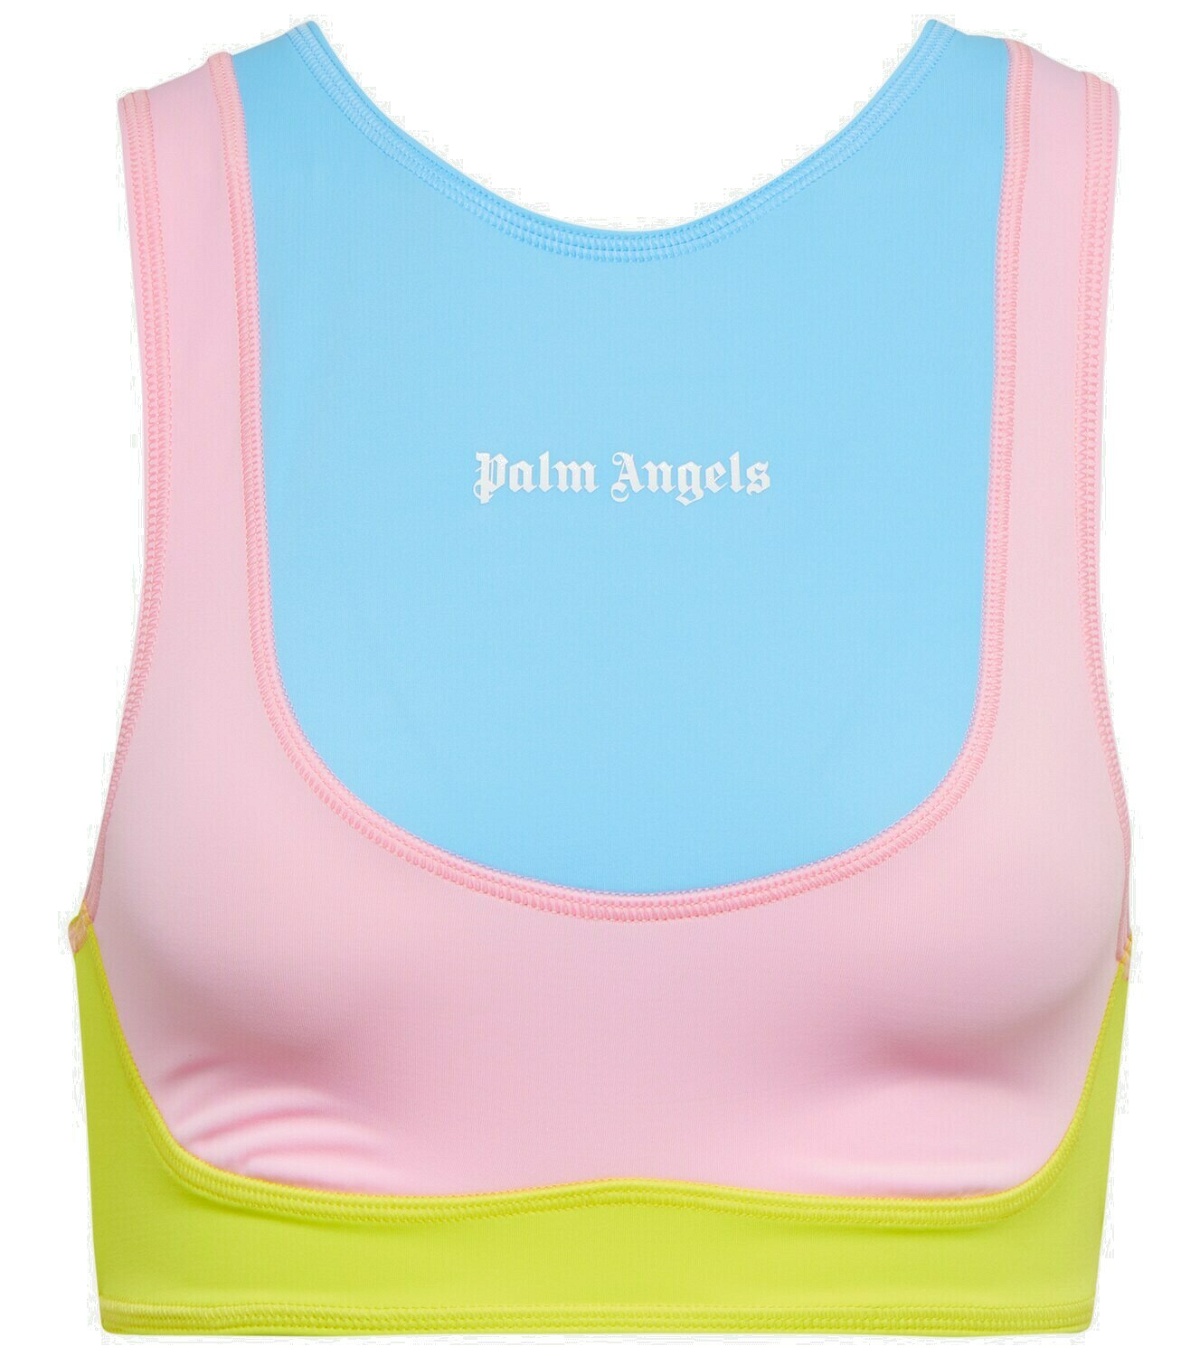 Palm Angels - Logo printed sports bra Palm Angels